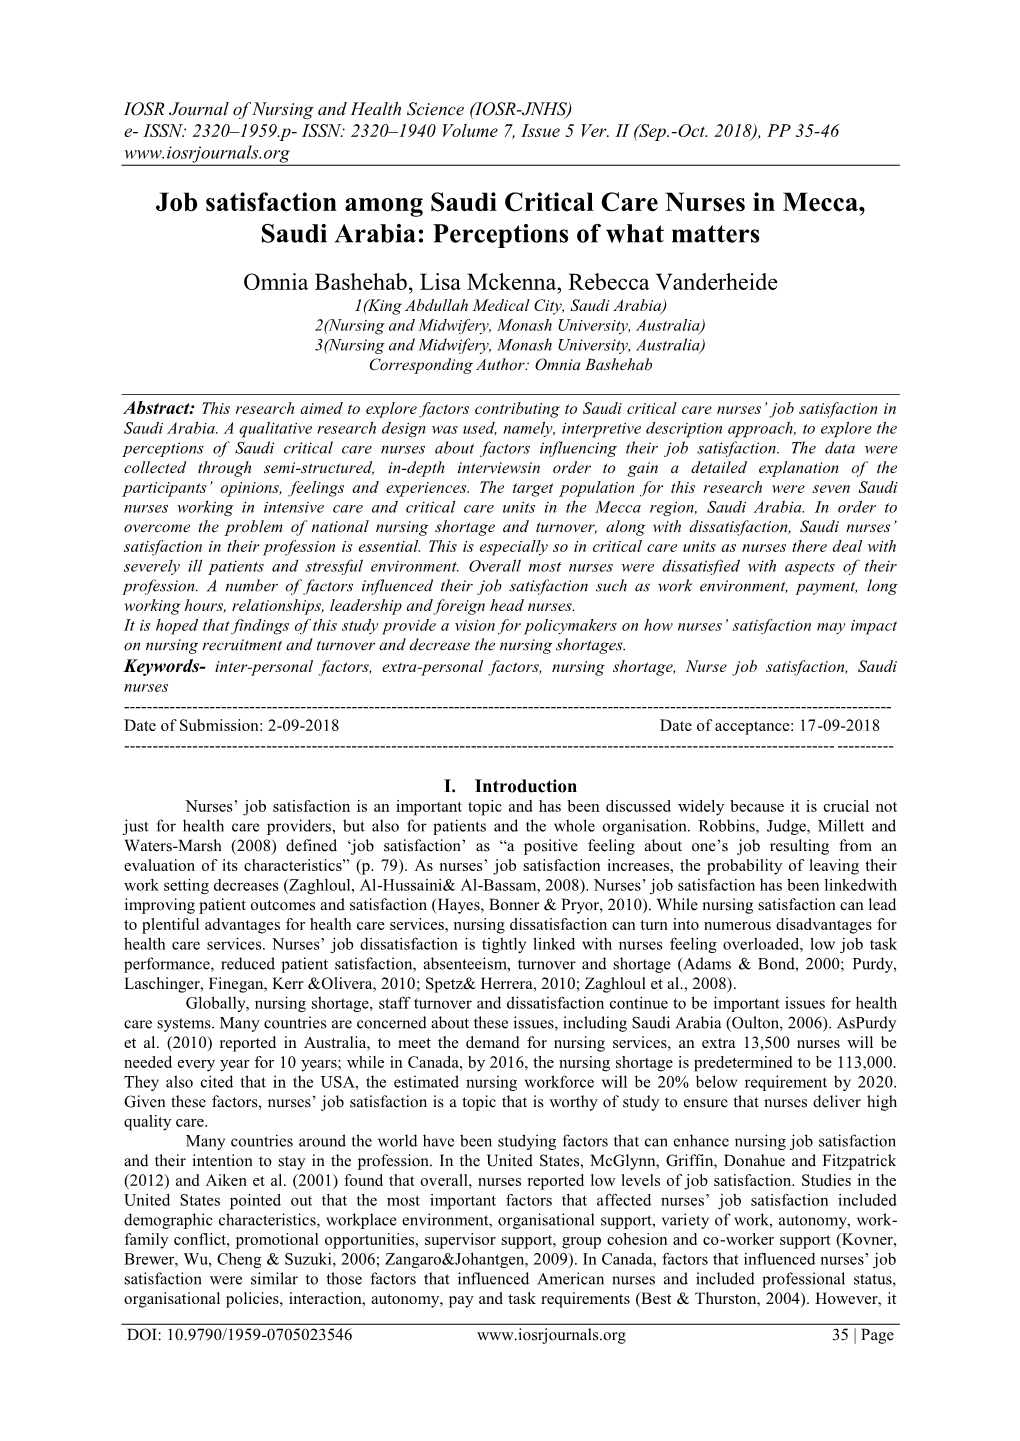 Job Satisfaction Among Saudi Critical Care Nurses in Mecca, Saudi Arabia: Perceptions of What Matters